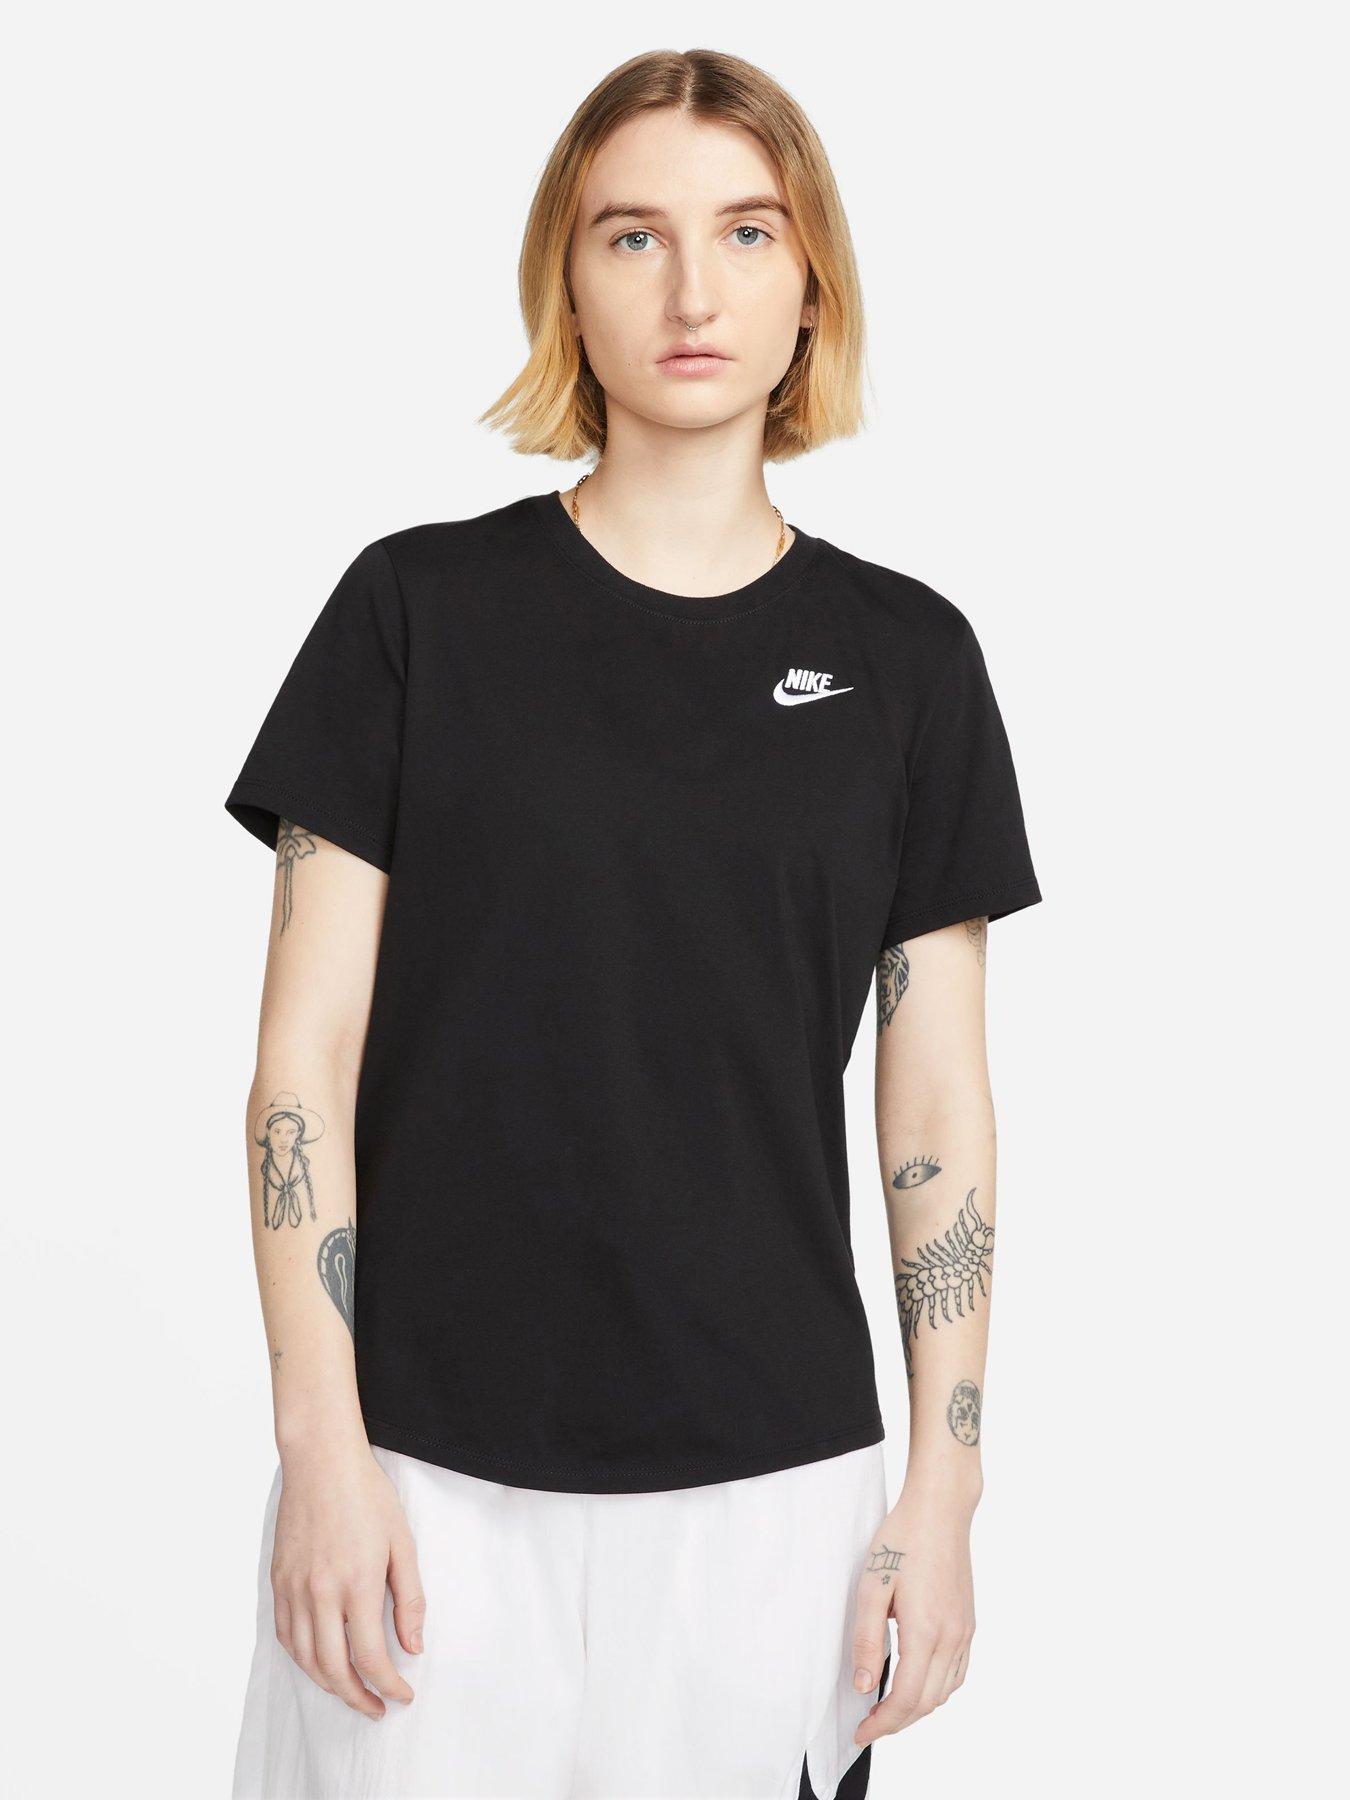 Black, Short Sleeve, XS, Womens sports clothing